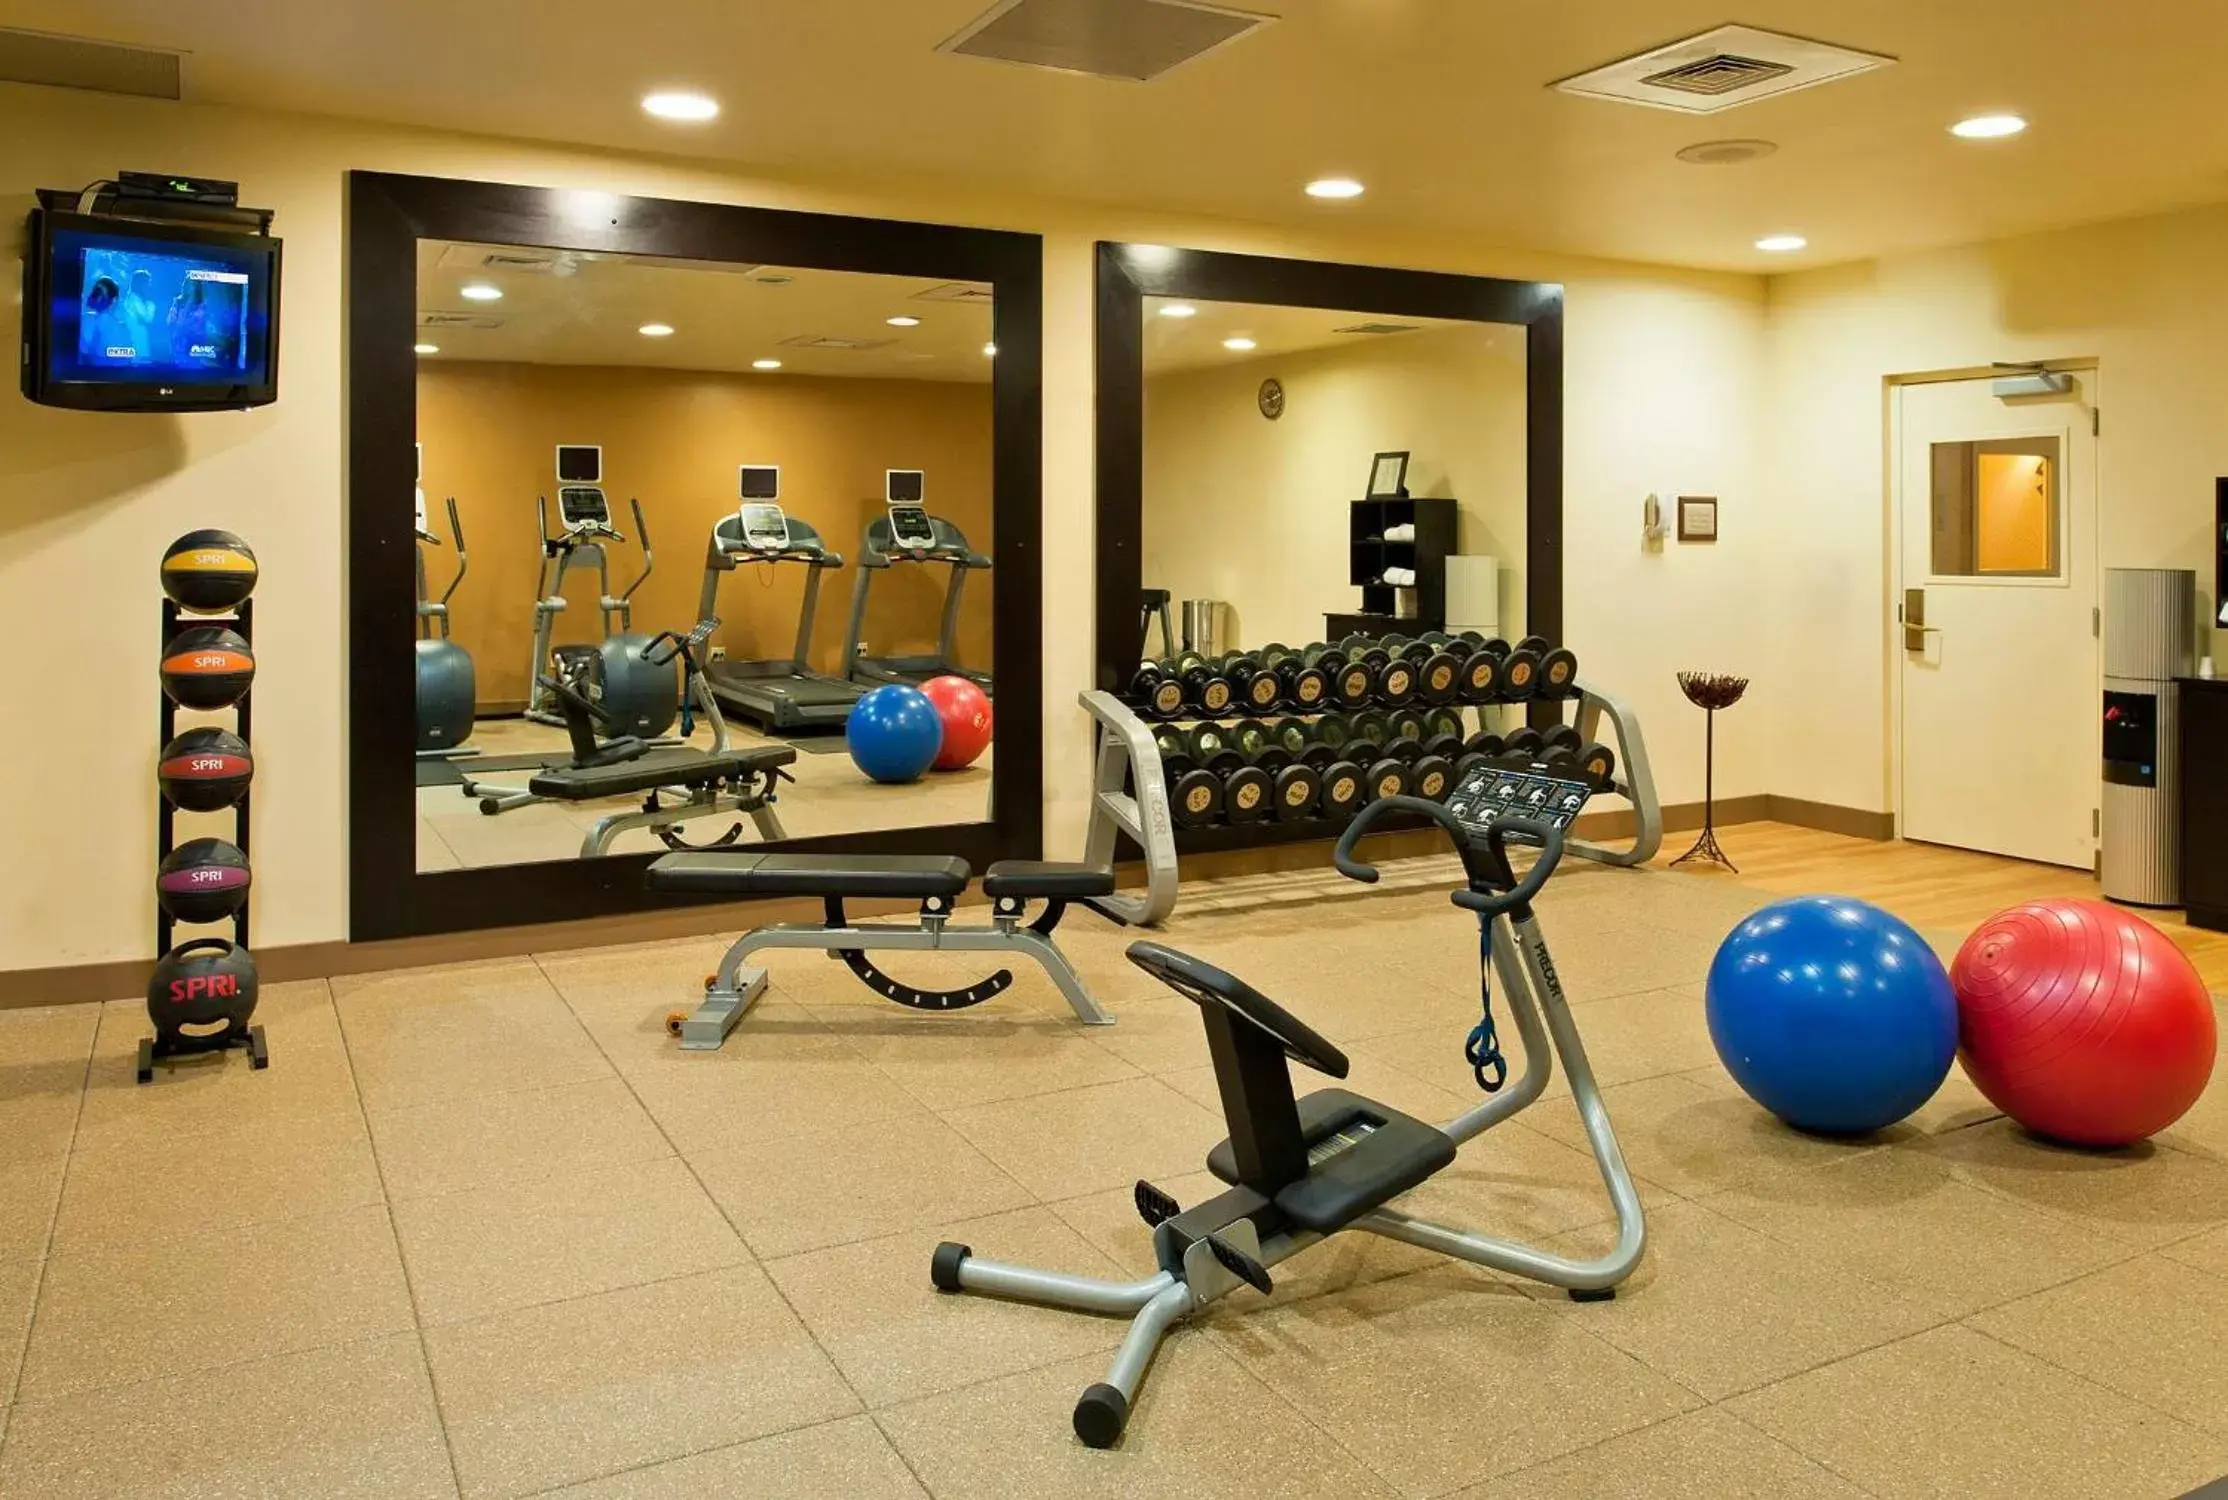 Fitness centre/facilities, Fitness Center/Facilities in Hilton Garden Inn Shelton